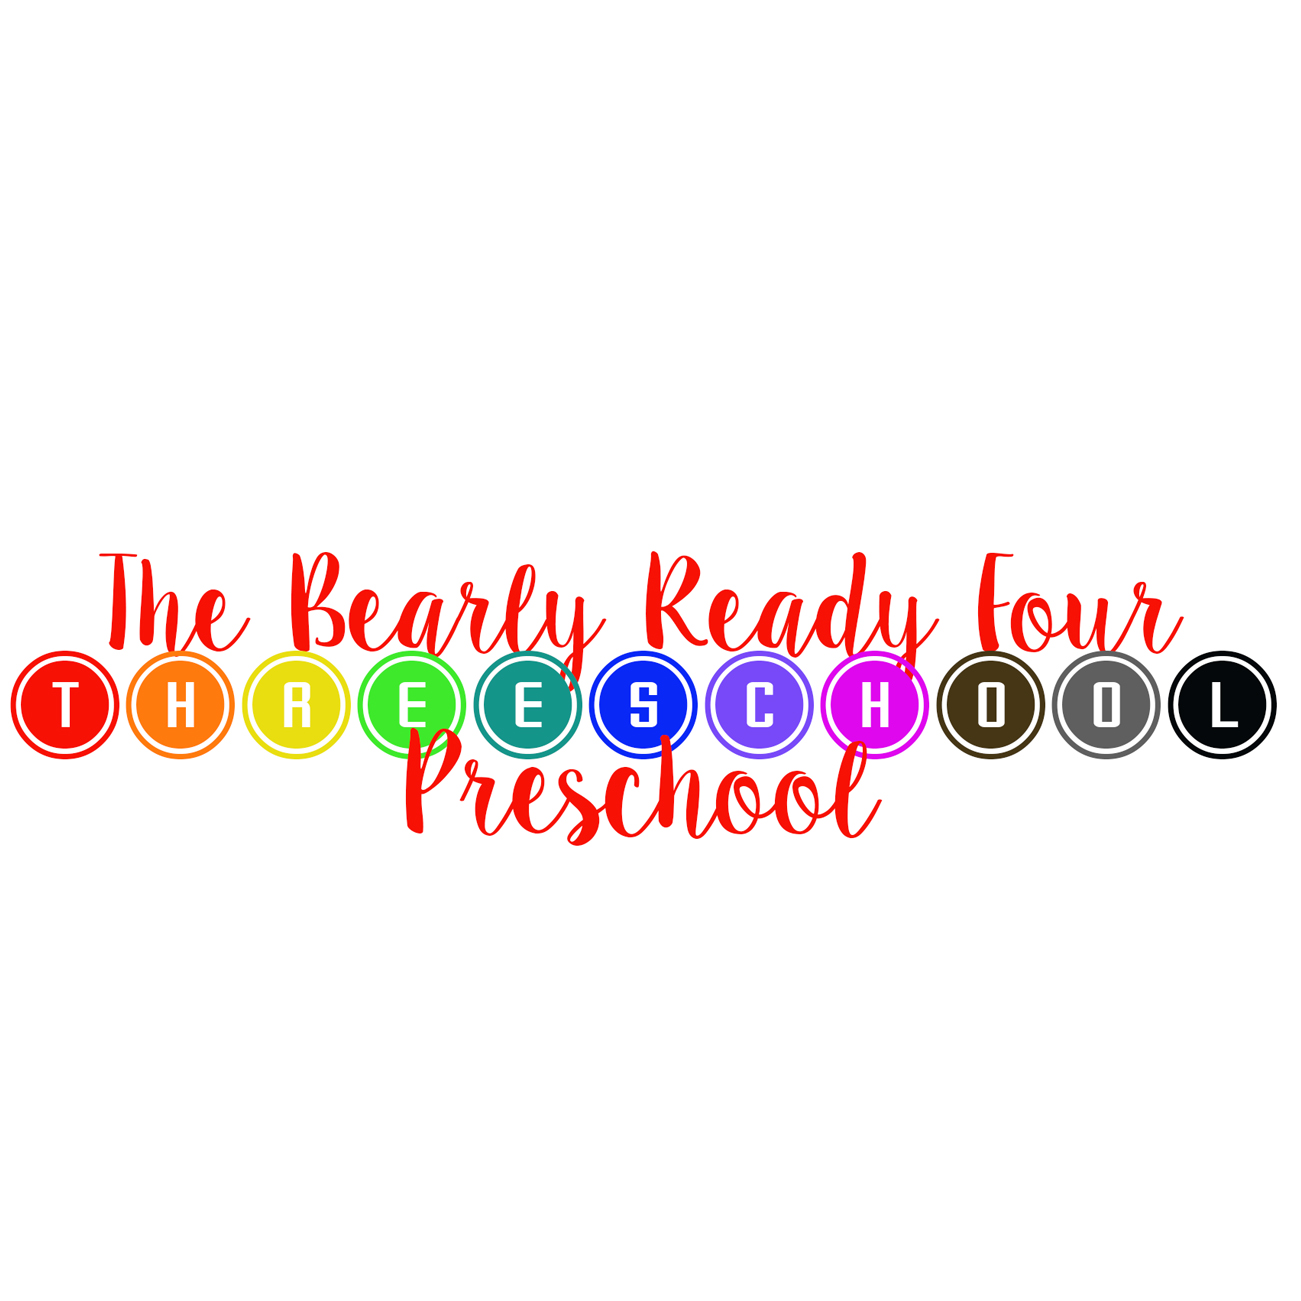 The Bearly Ready Four-Threeschool Preschool